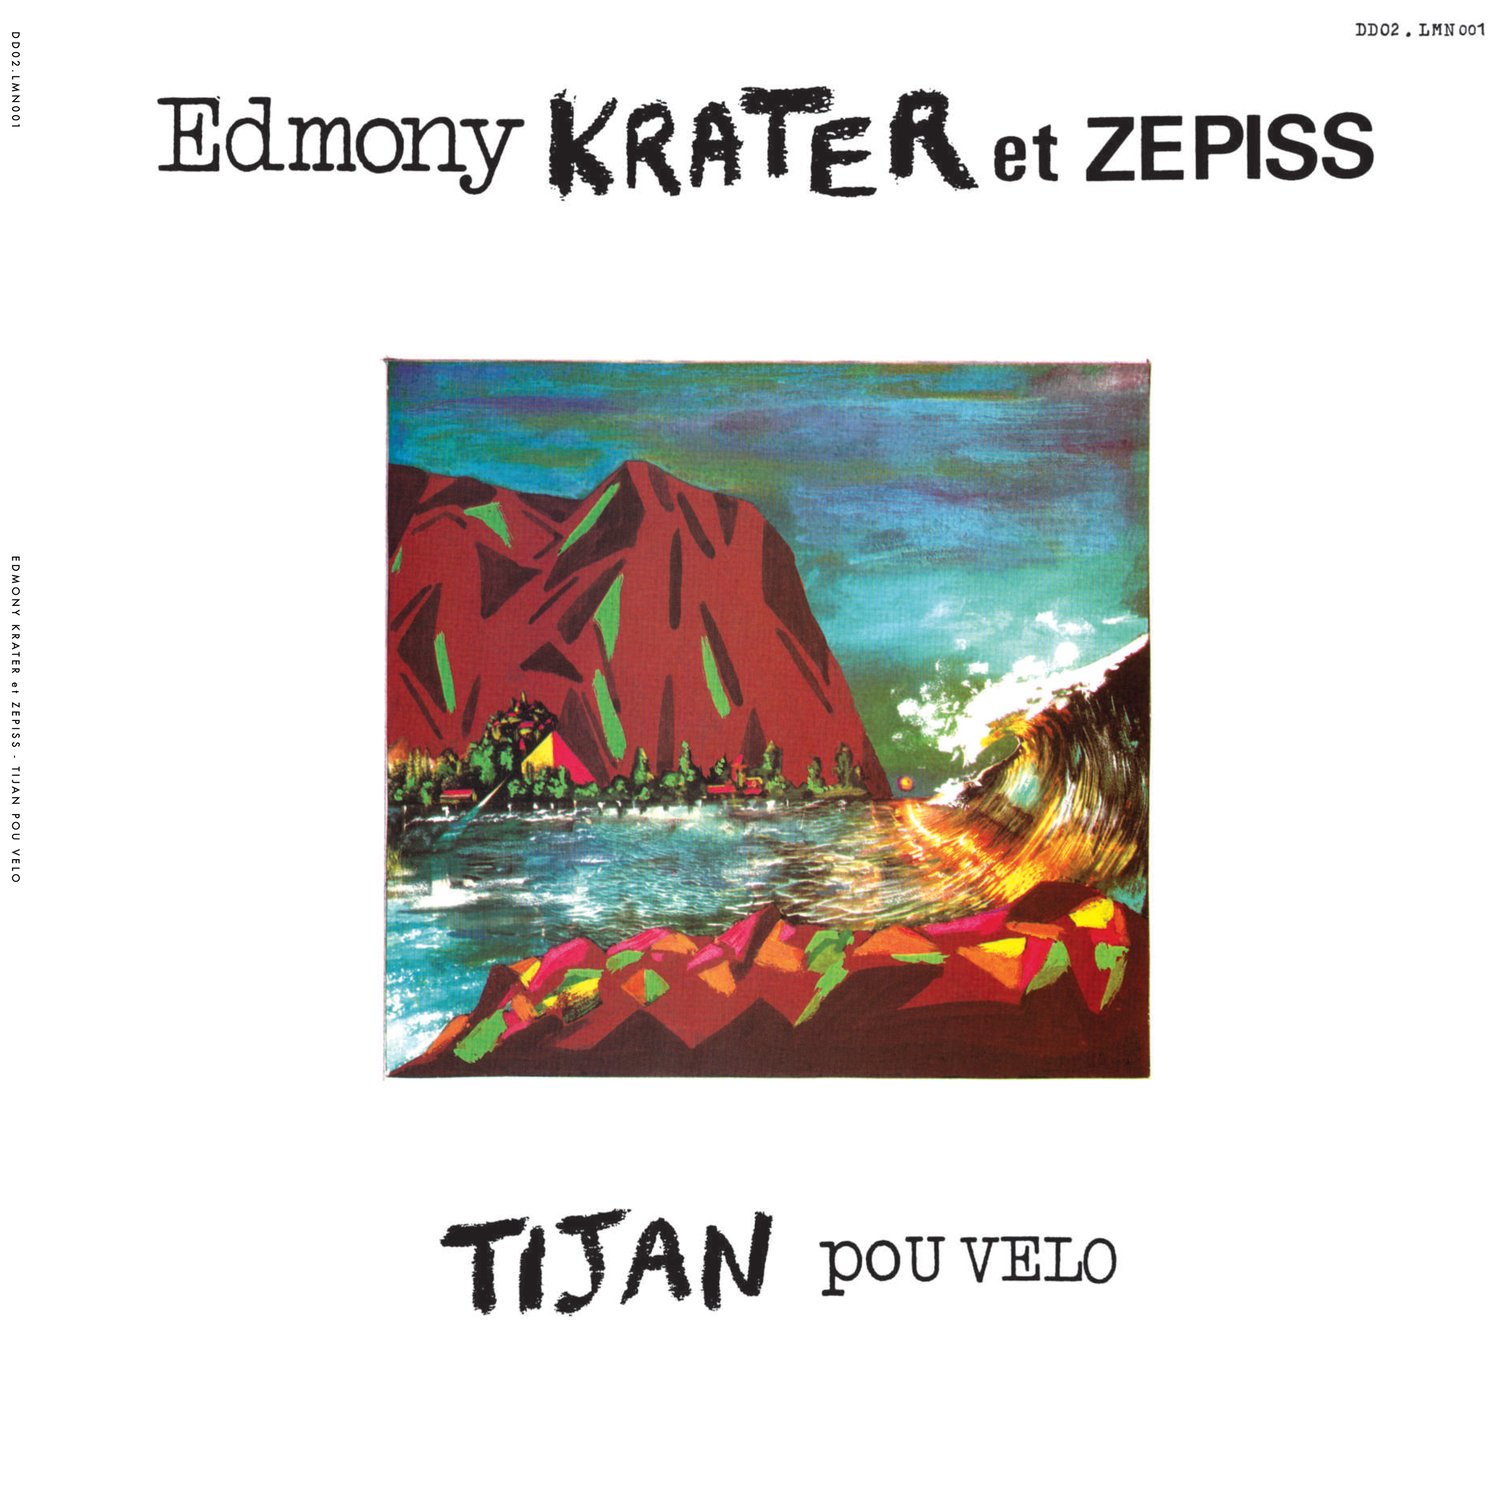 Edmony Krater Et Zepiss - Ti Jan Pou Velo (Limited Official Repress)